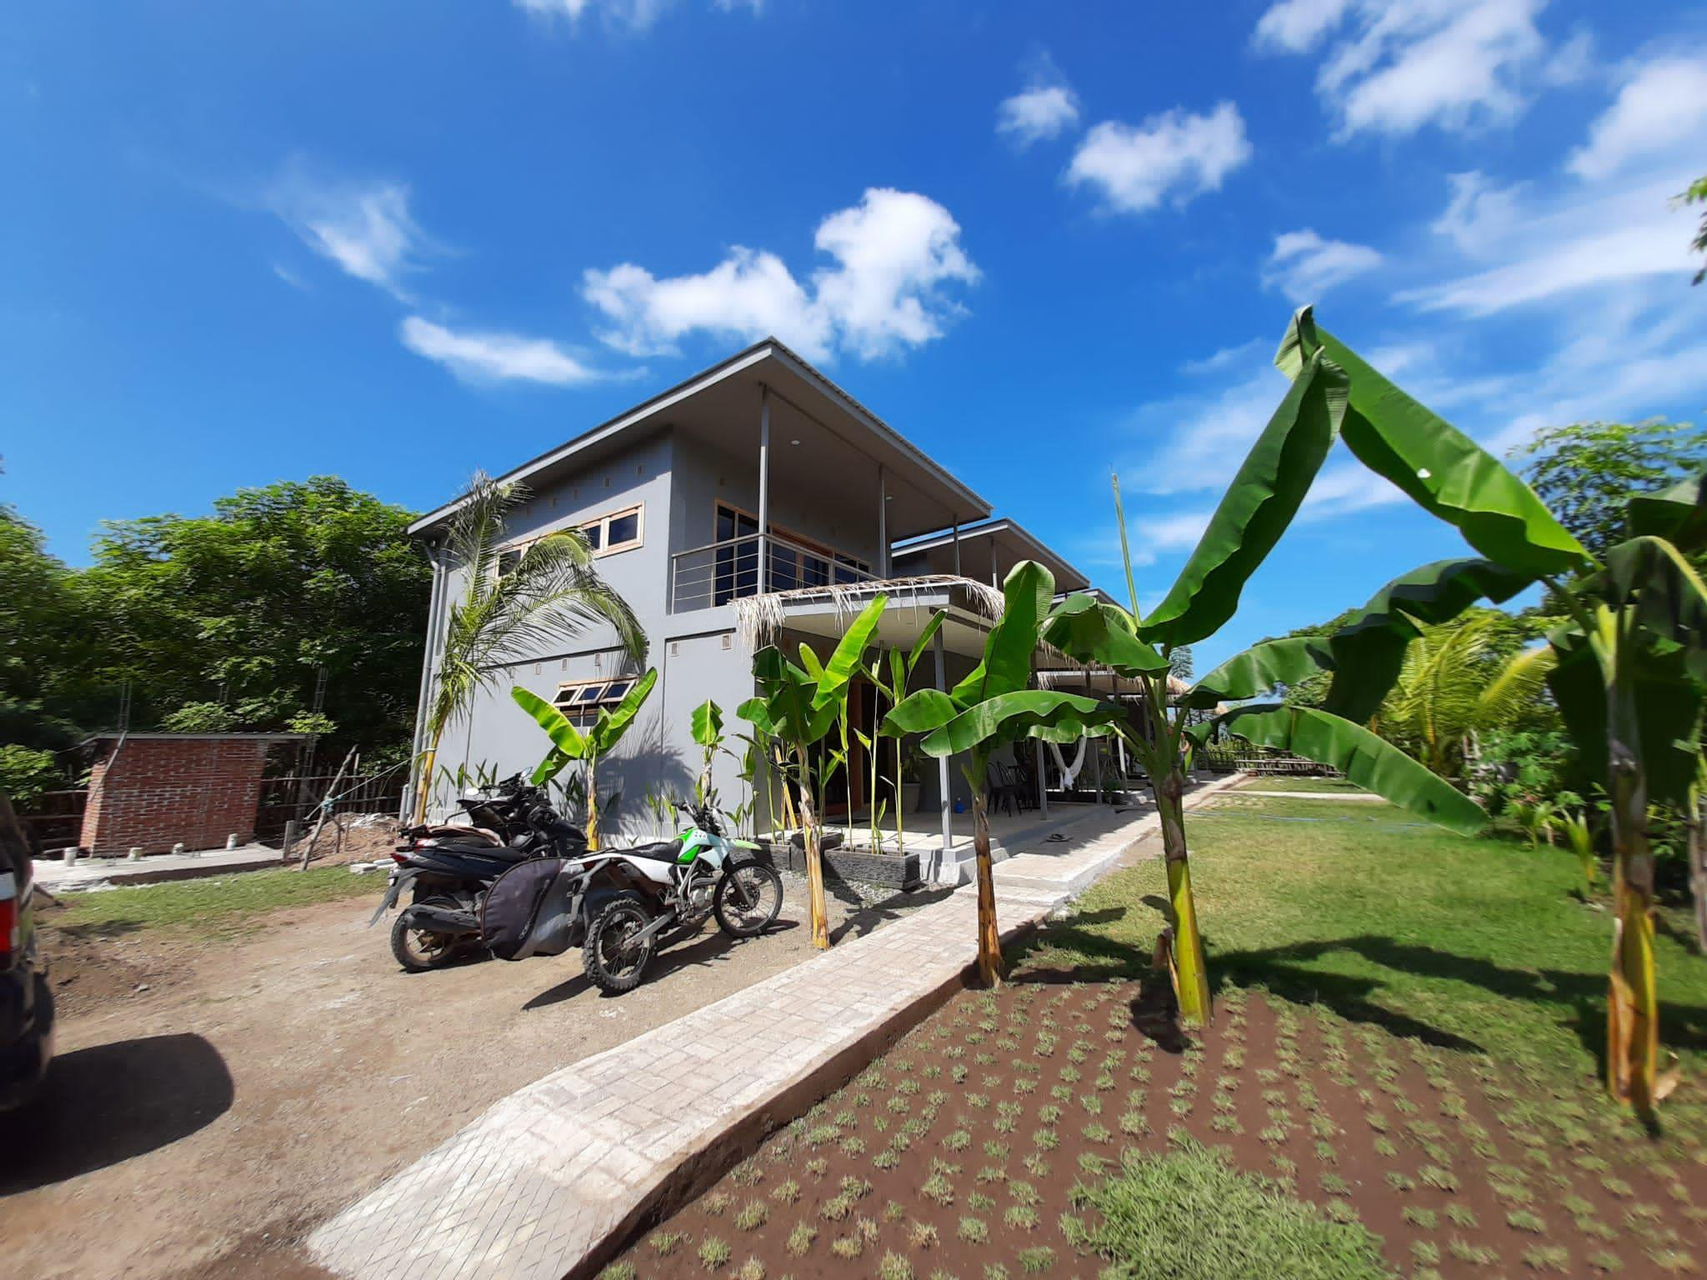 Exterior & Views 1, Blamada Villas, Sumbawa Barat